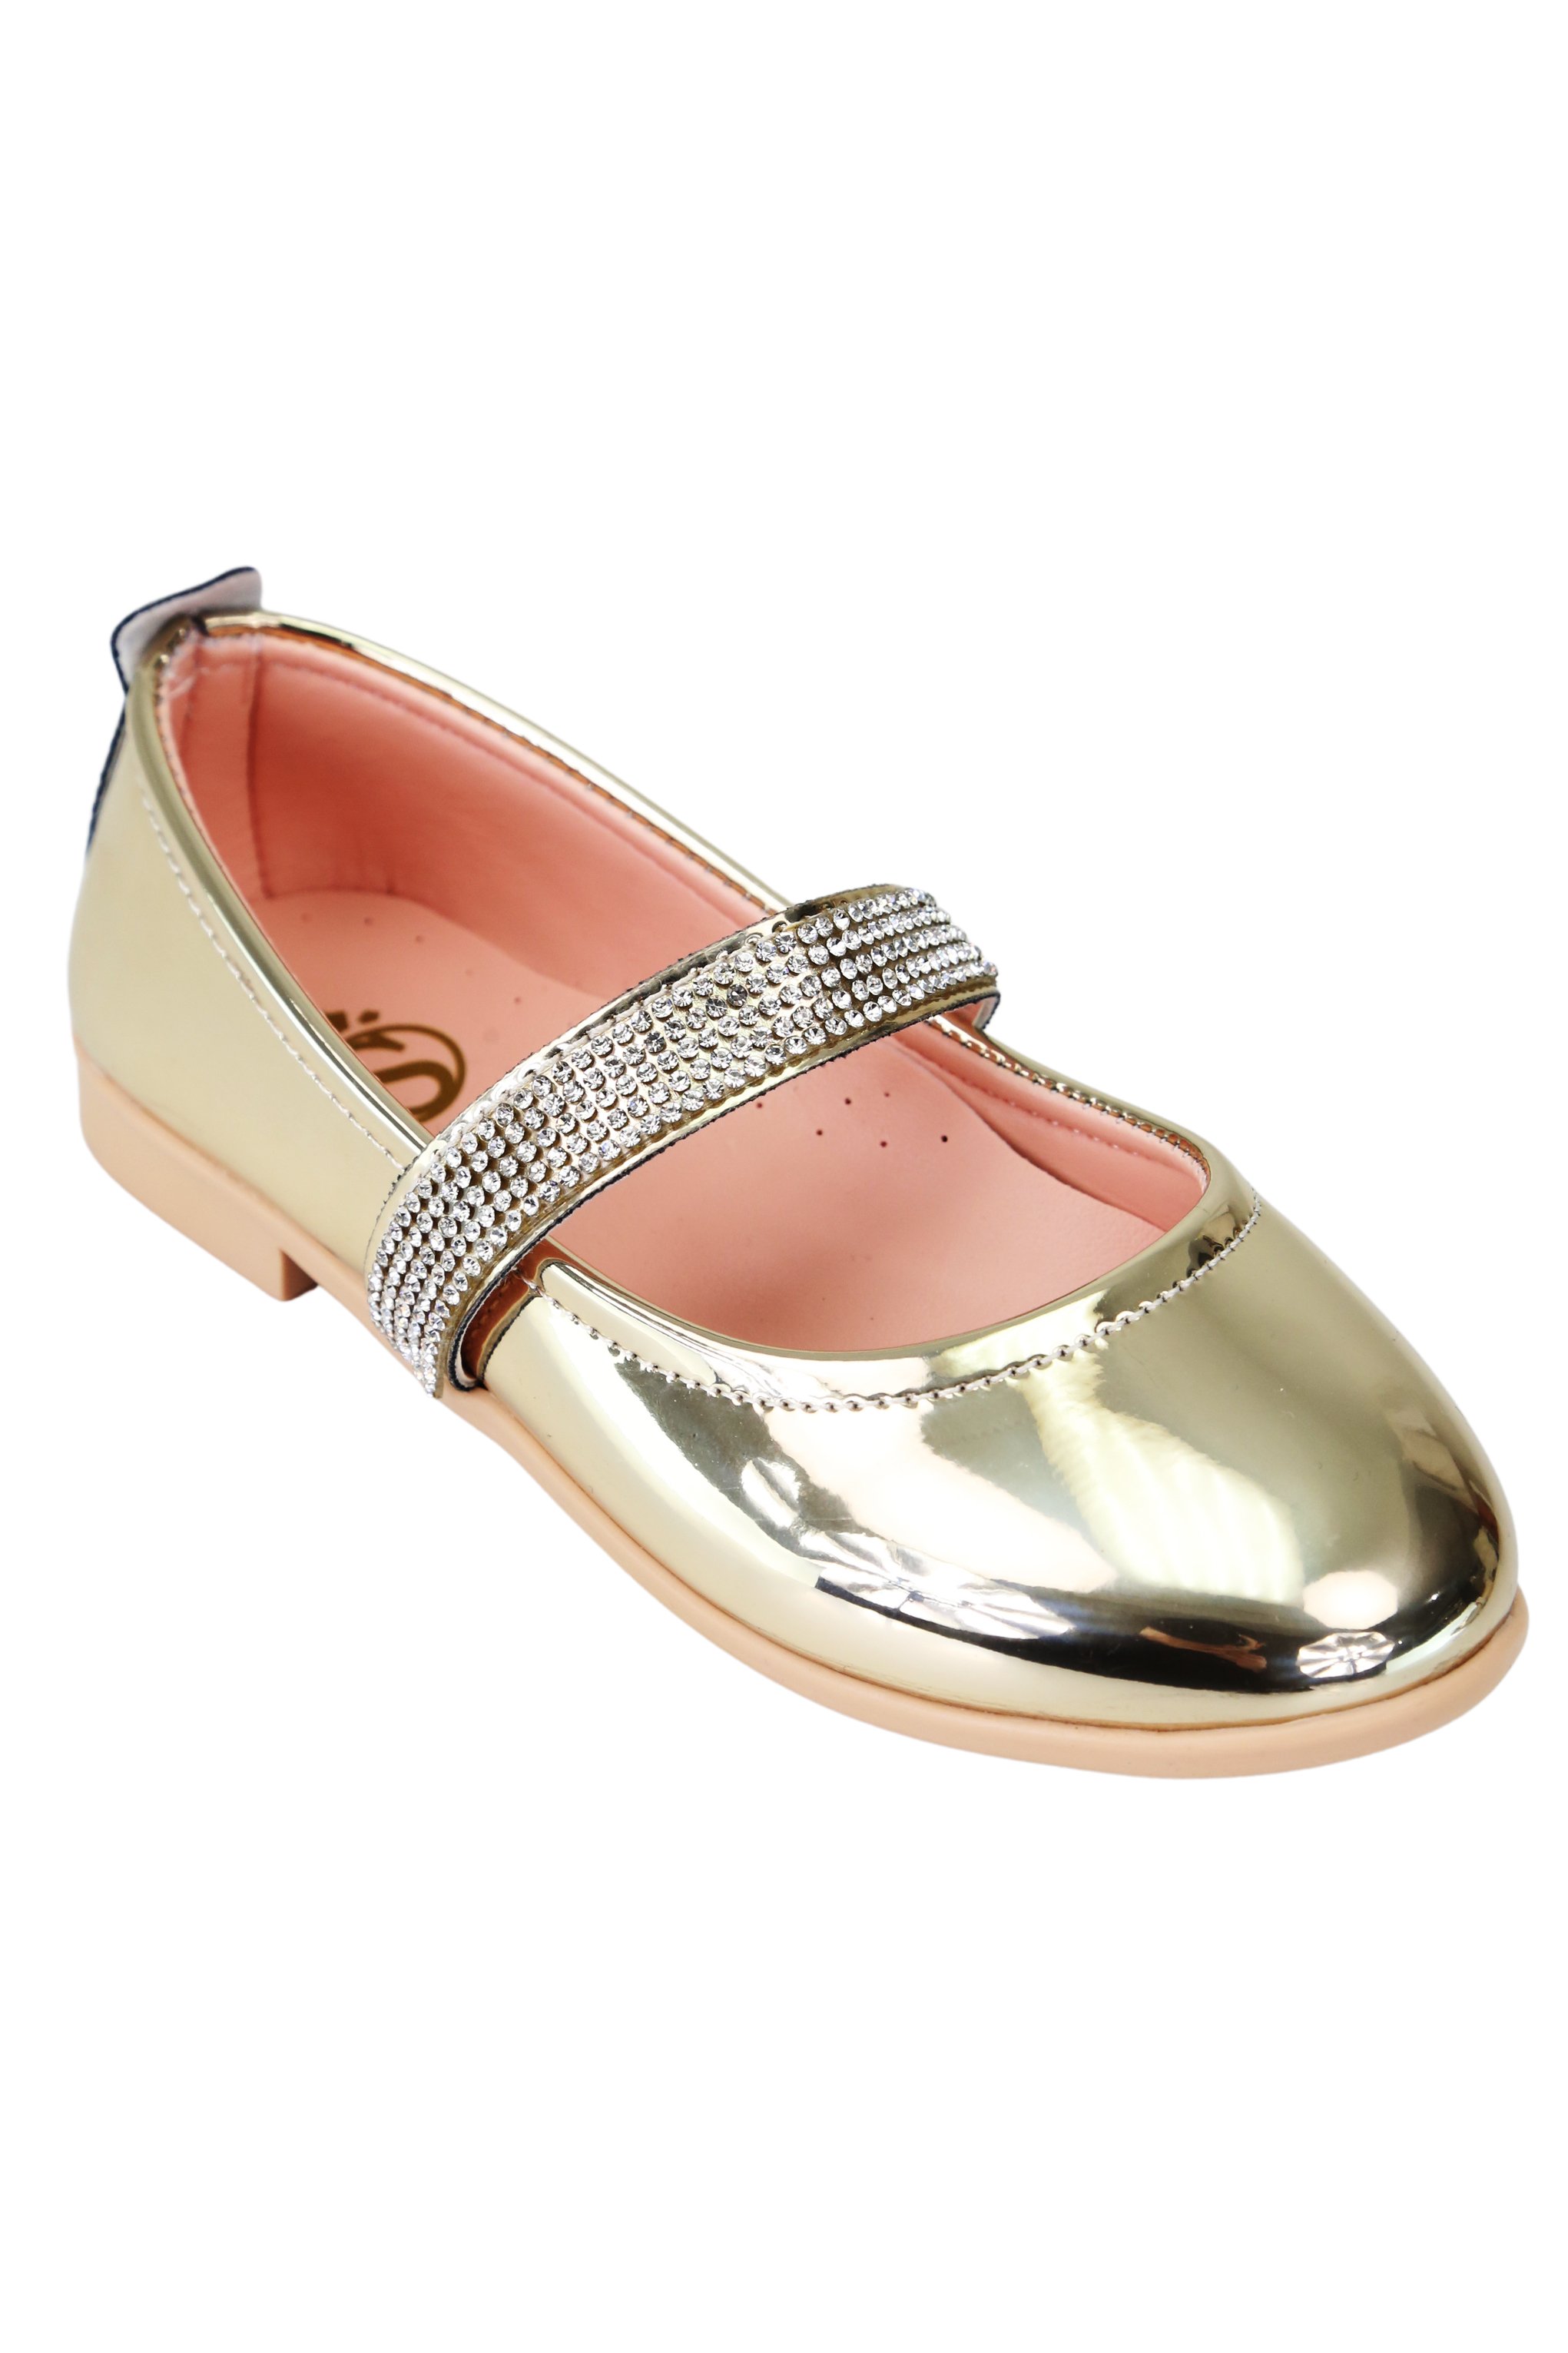 Girls Rhinestone Patent Mary Jane Shoes - ARWEN - Gold